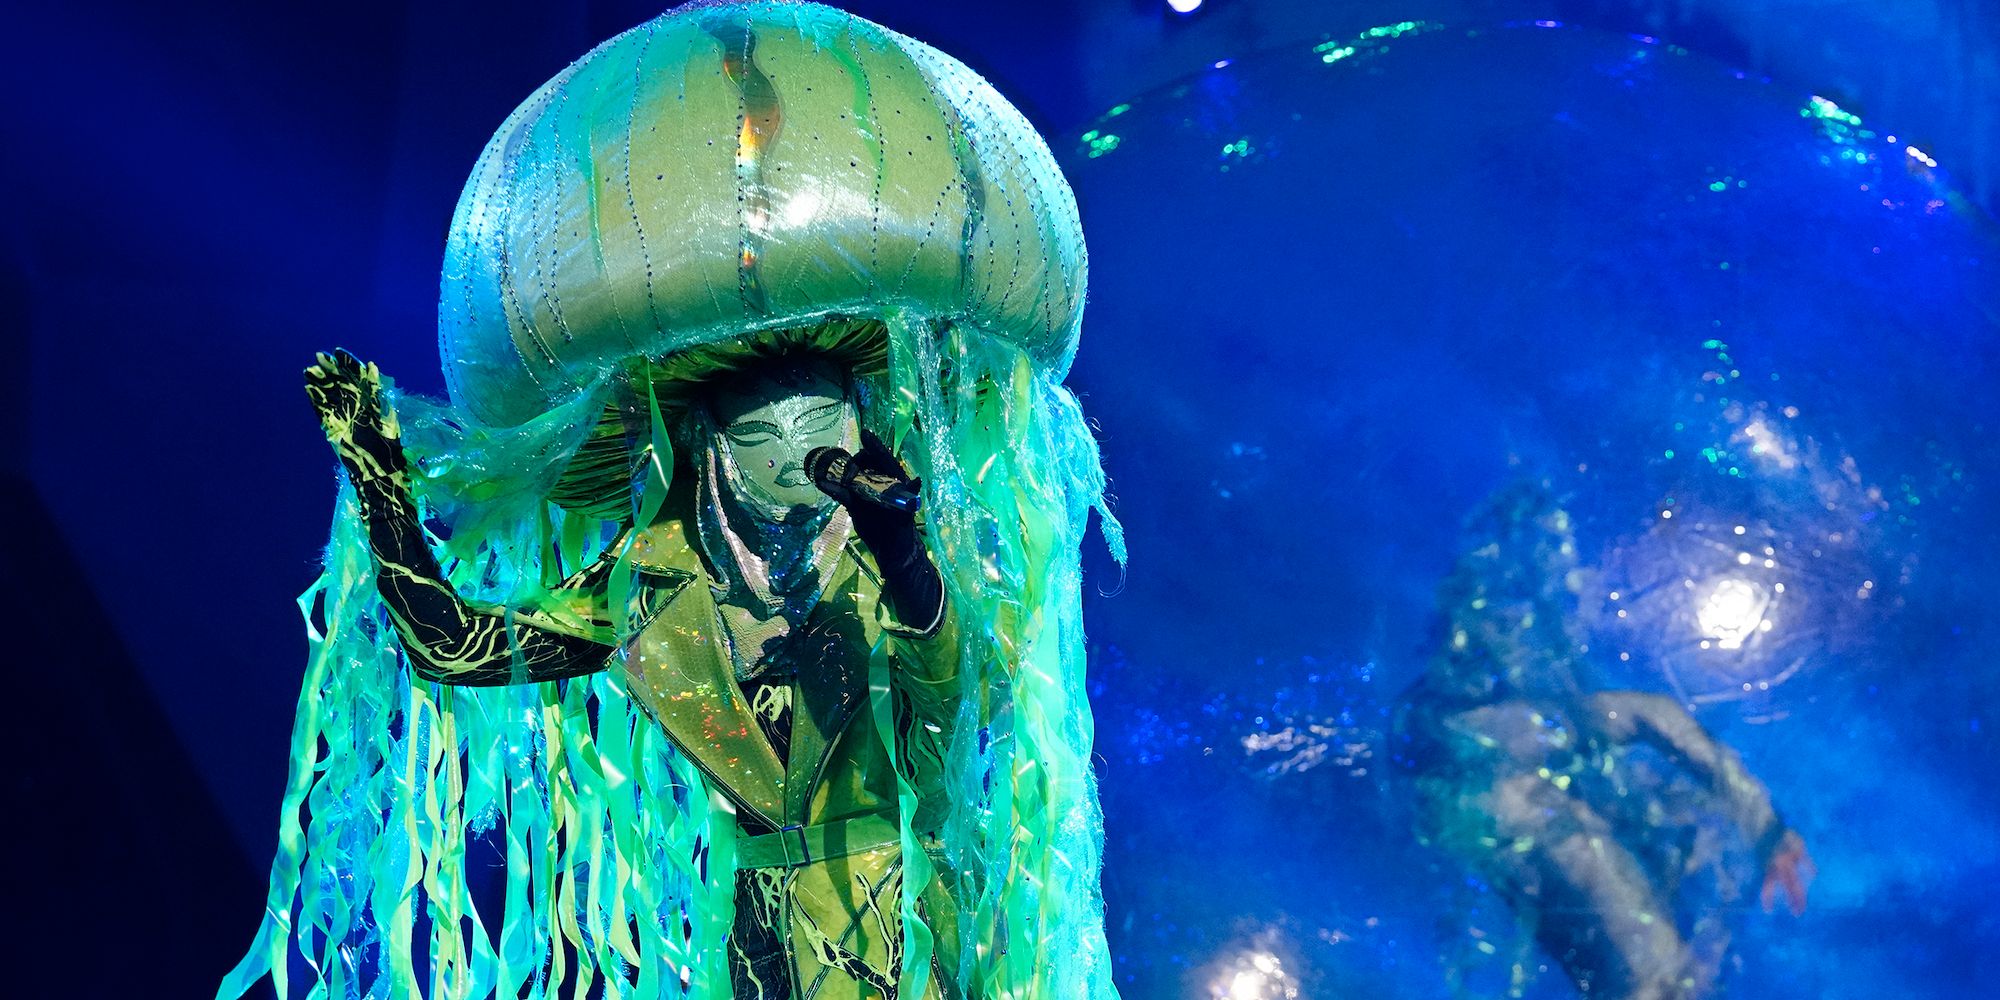 The Masked Singer: Who Jellyfish está confirmado (Pista: no Billie Eilish)